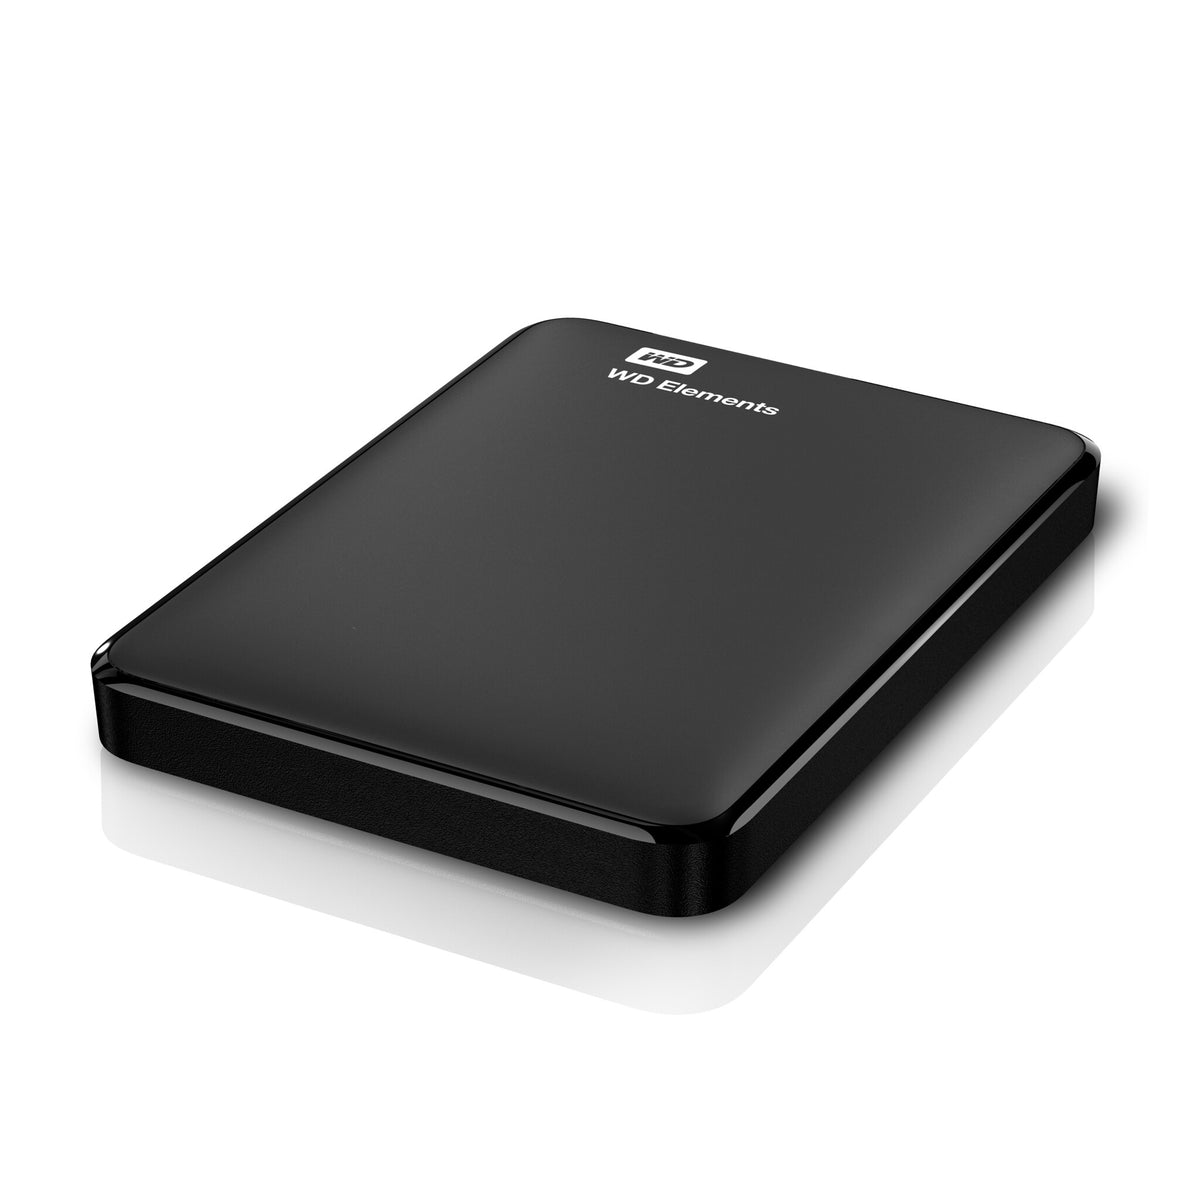 Western Digital WD Elements Portable - External hard drive in Black - 1.5 TB